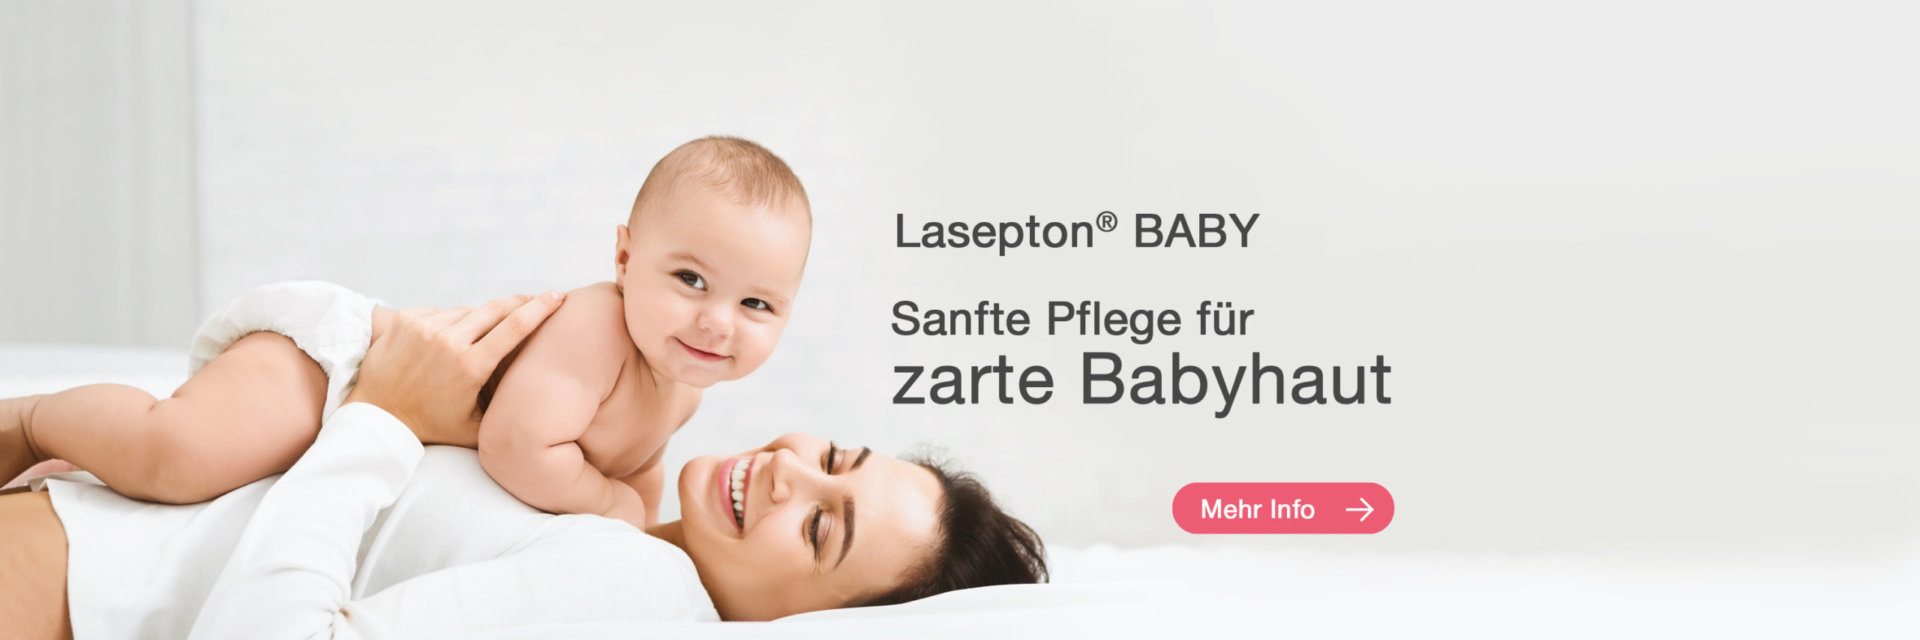 Lasepton® BABY